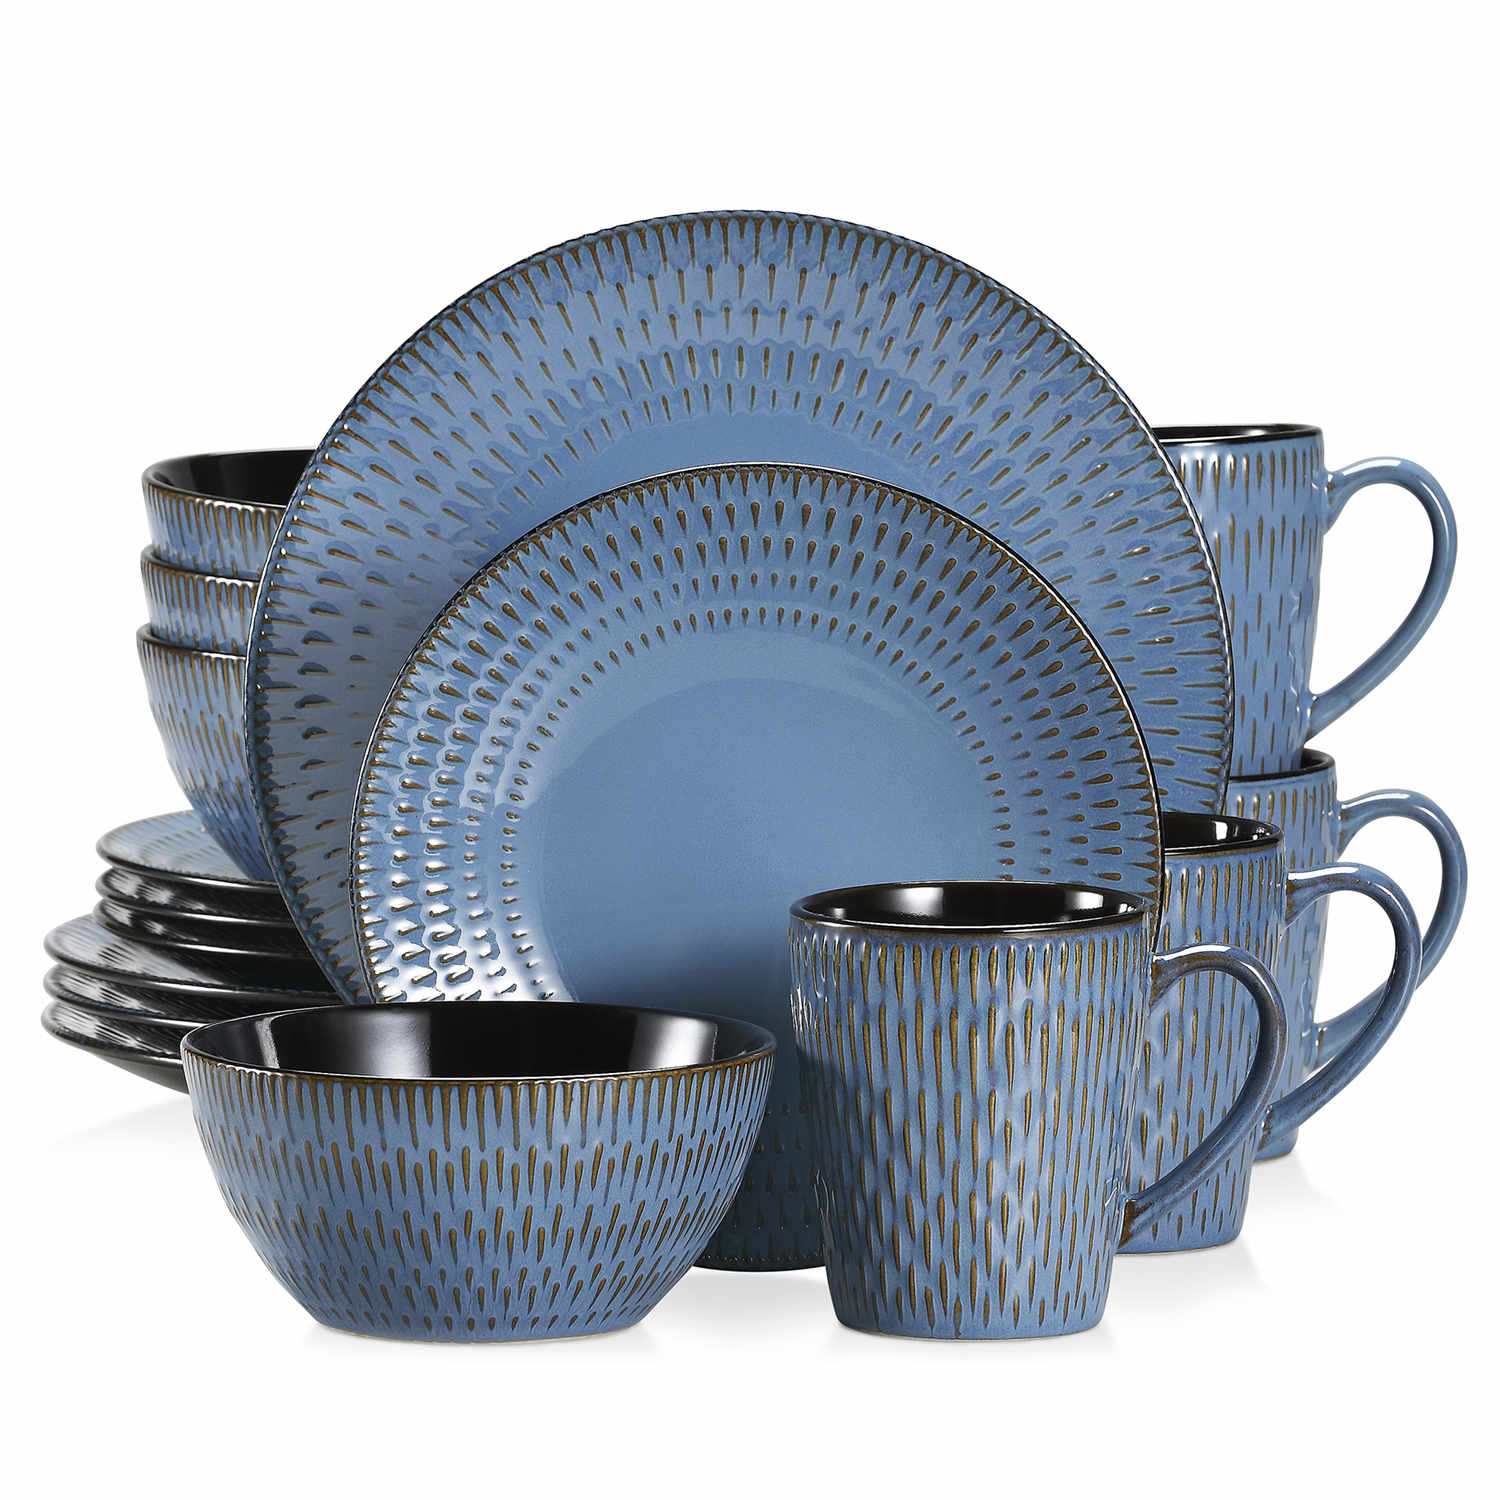 vancasso TULIP Dinnerware Set Porcelain Tableware Plate Bowl Mug